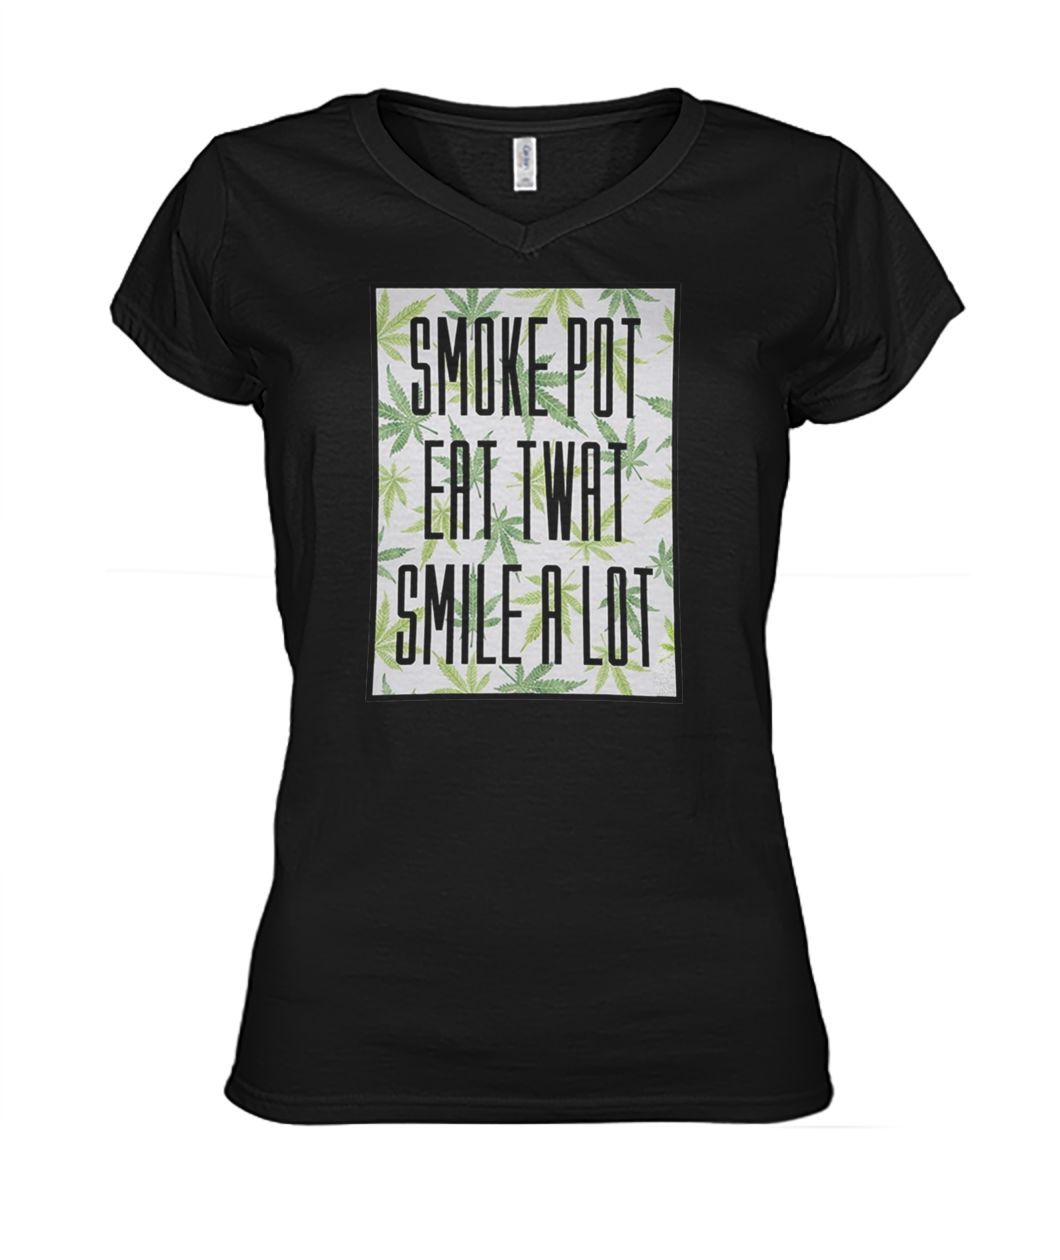 Weeds smoke pot eat twat smile a lot women's v-neck